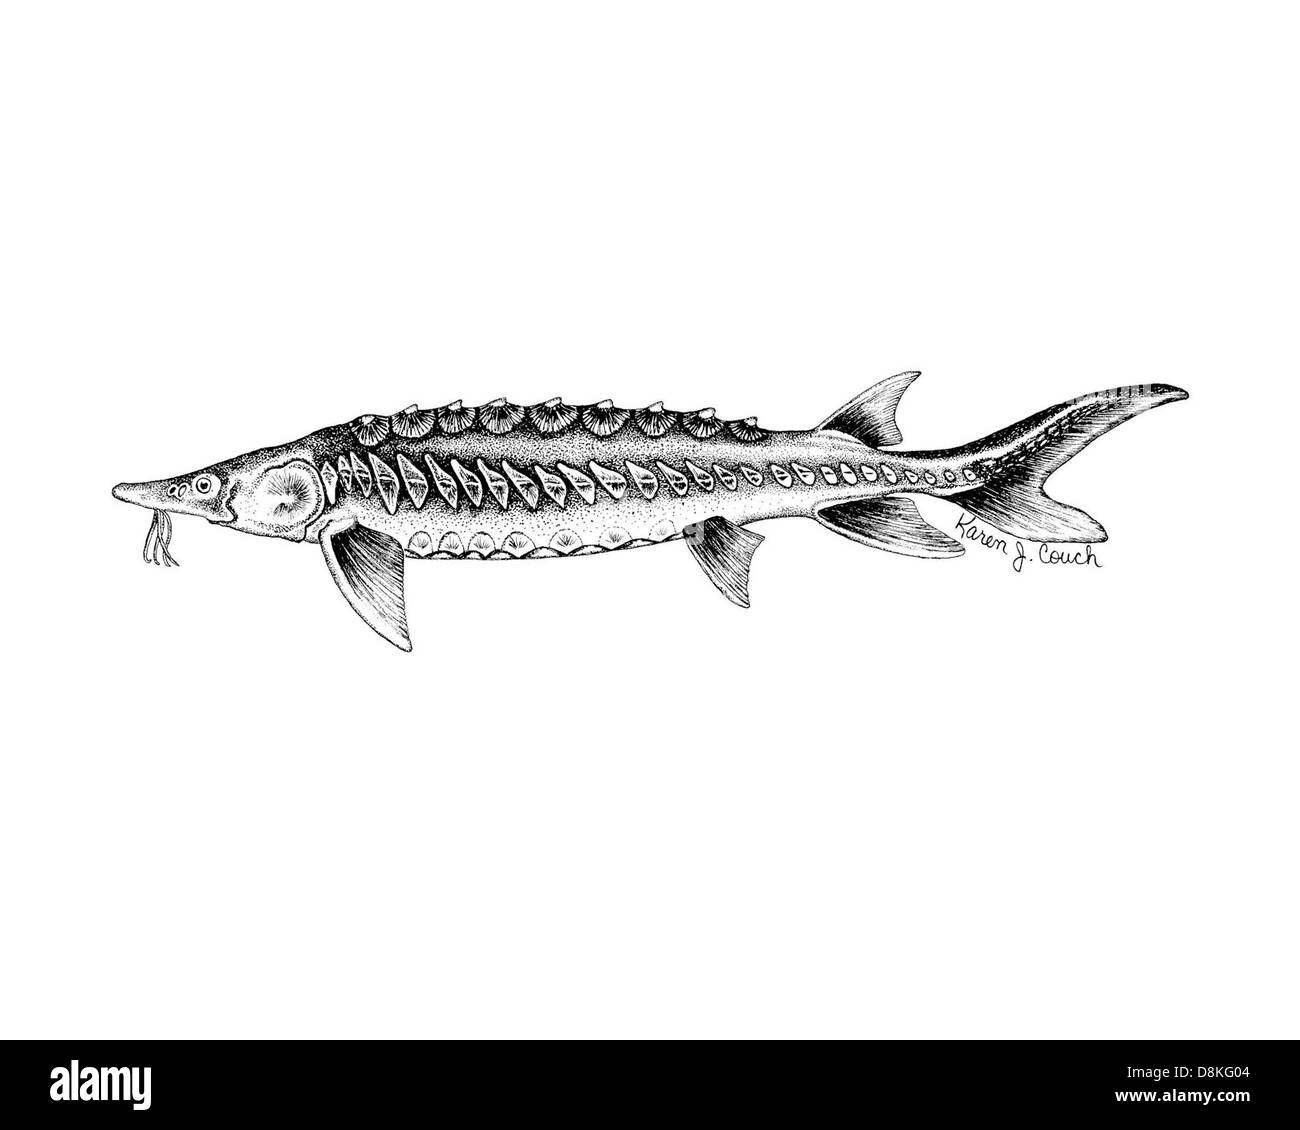 Sturgeon fish Black and White Stock Photos & Images - Alamy